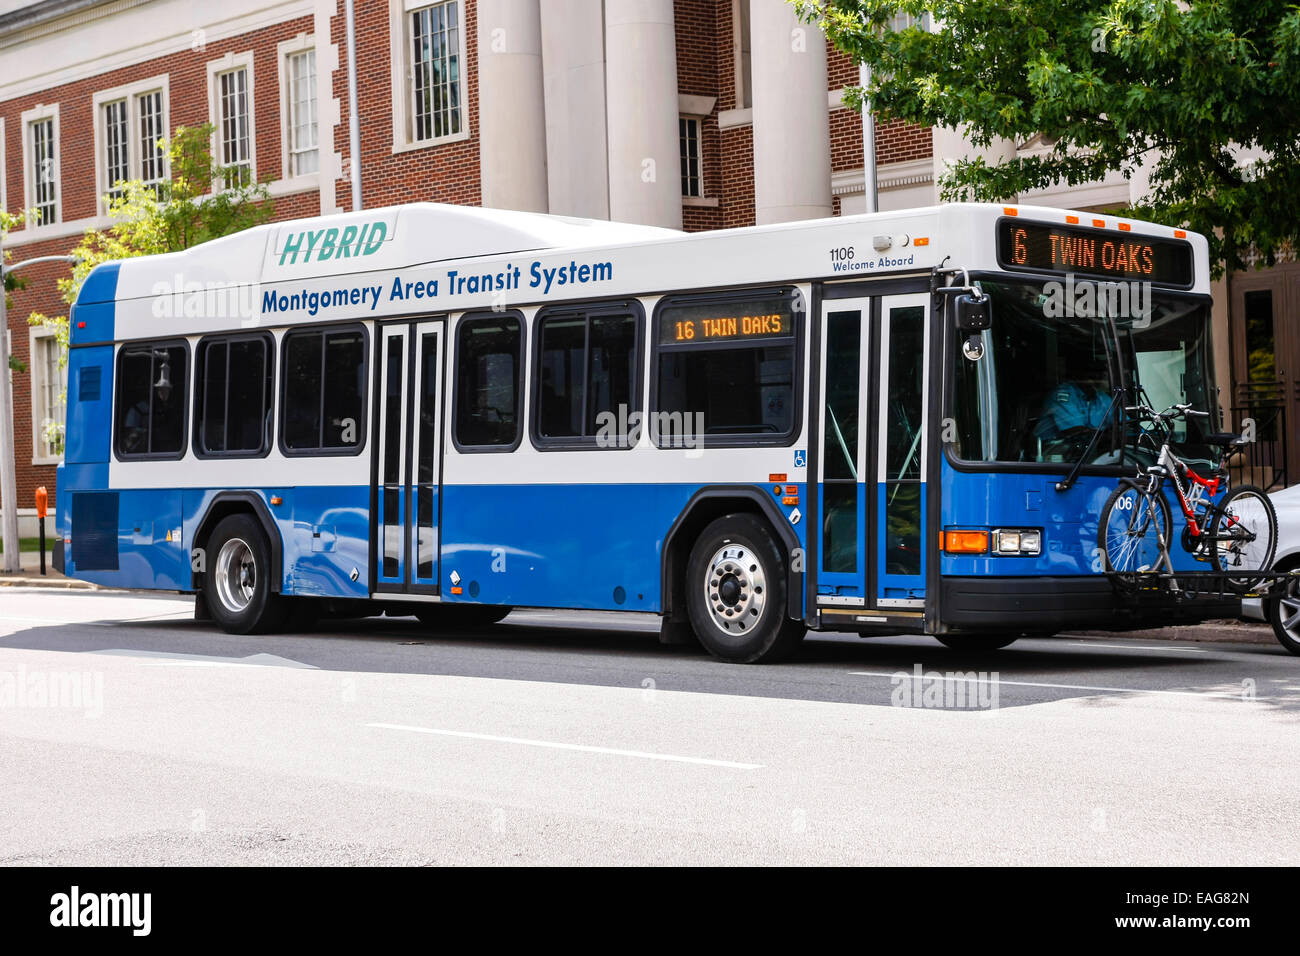 Montgomery Area Transit System hybrid city bus Stock Photo